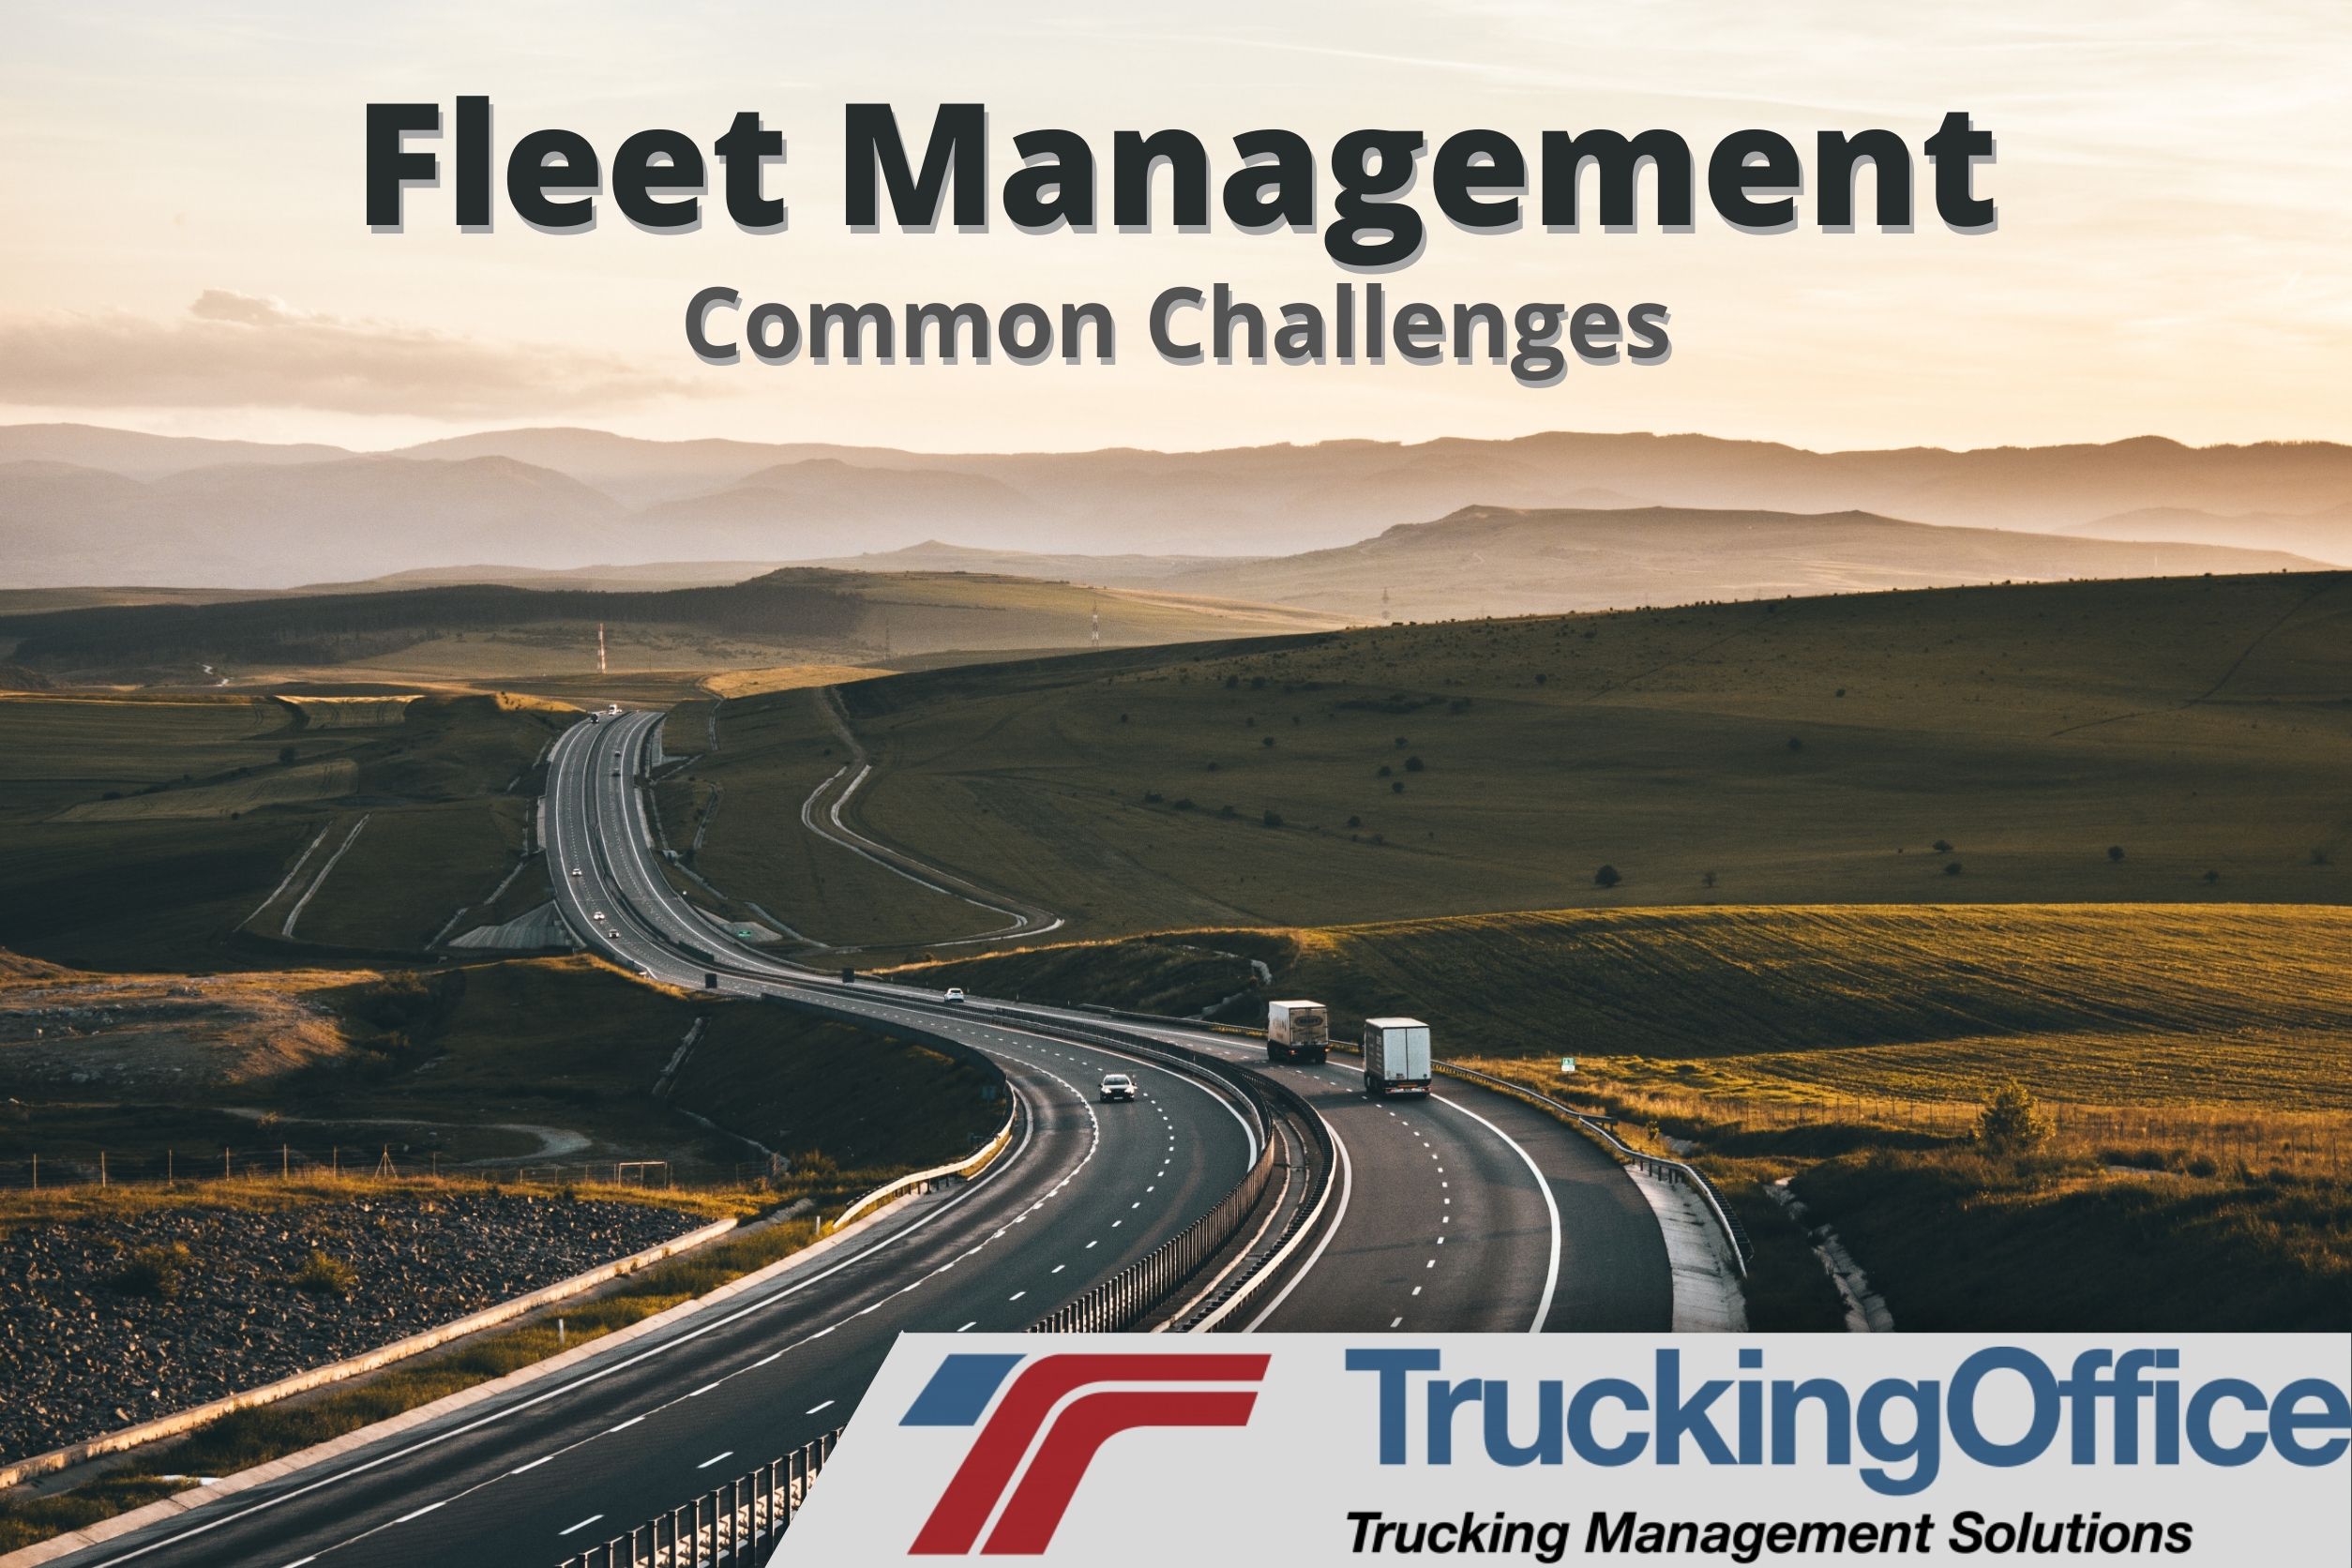 3 Common Fleet Management Challenges